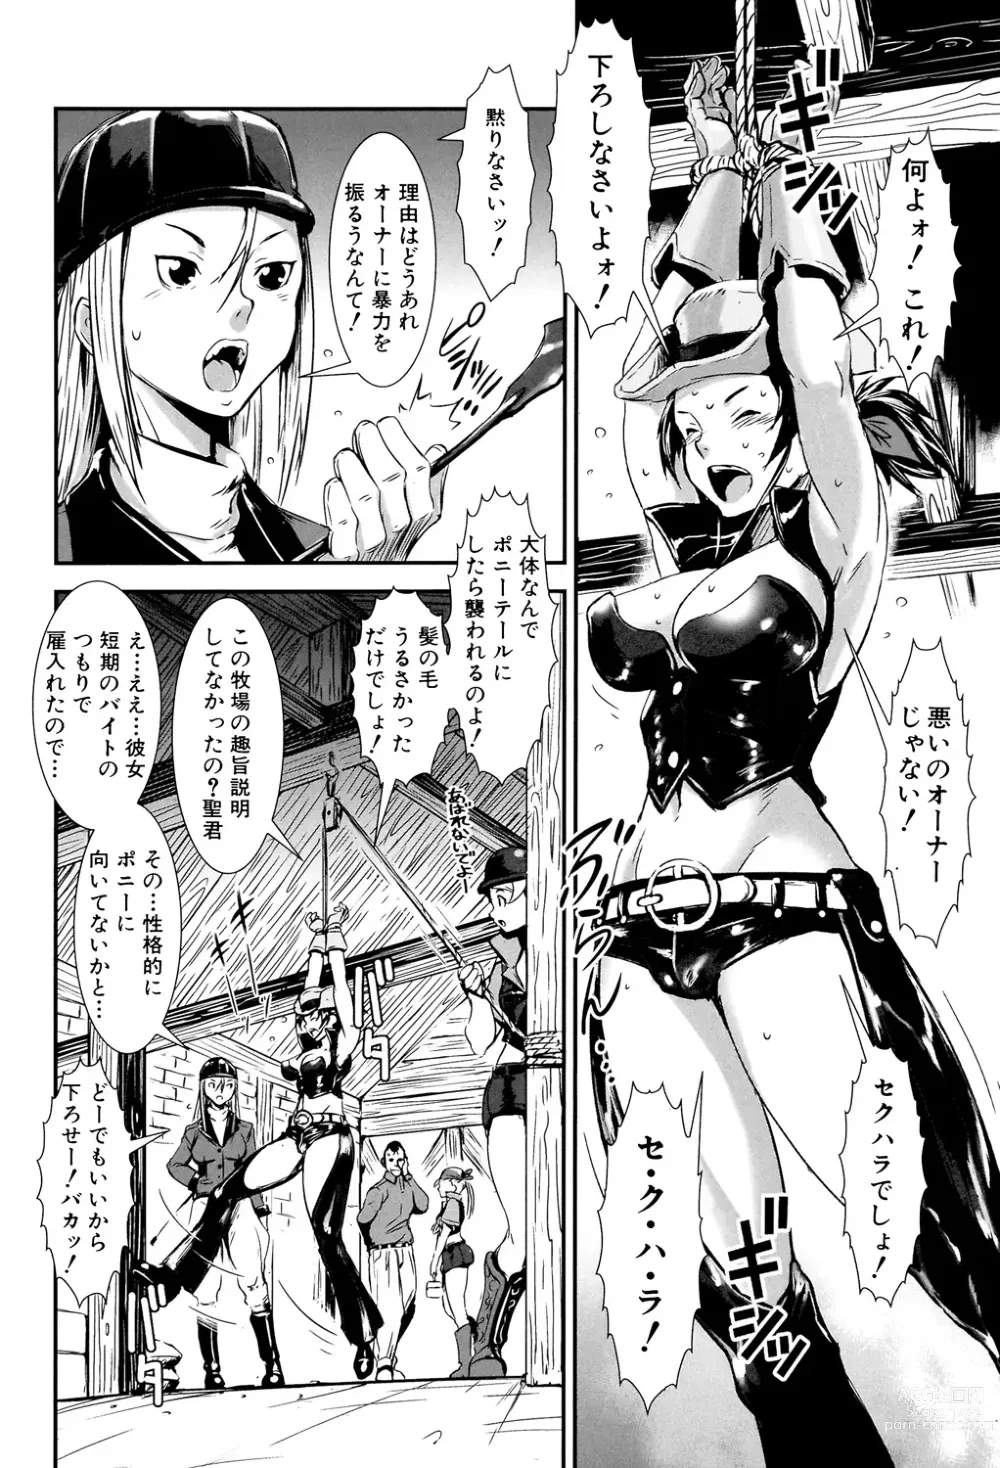 Page 10 of manga MAS HOLic